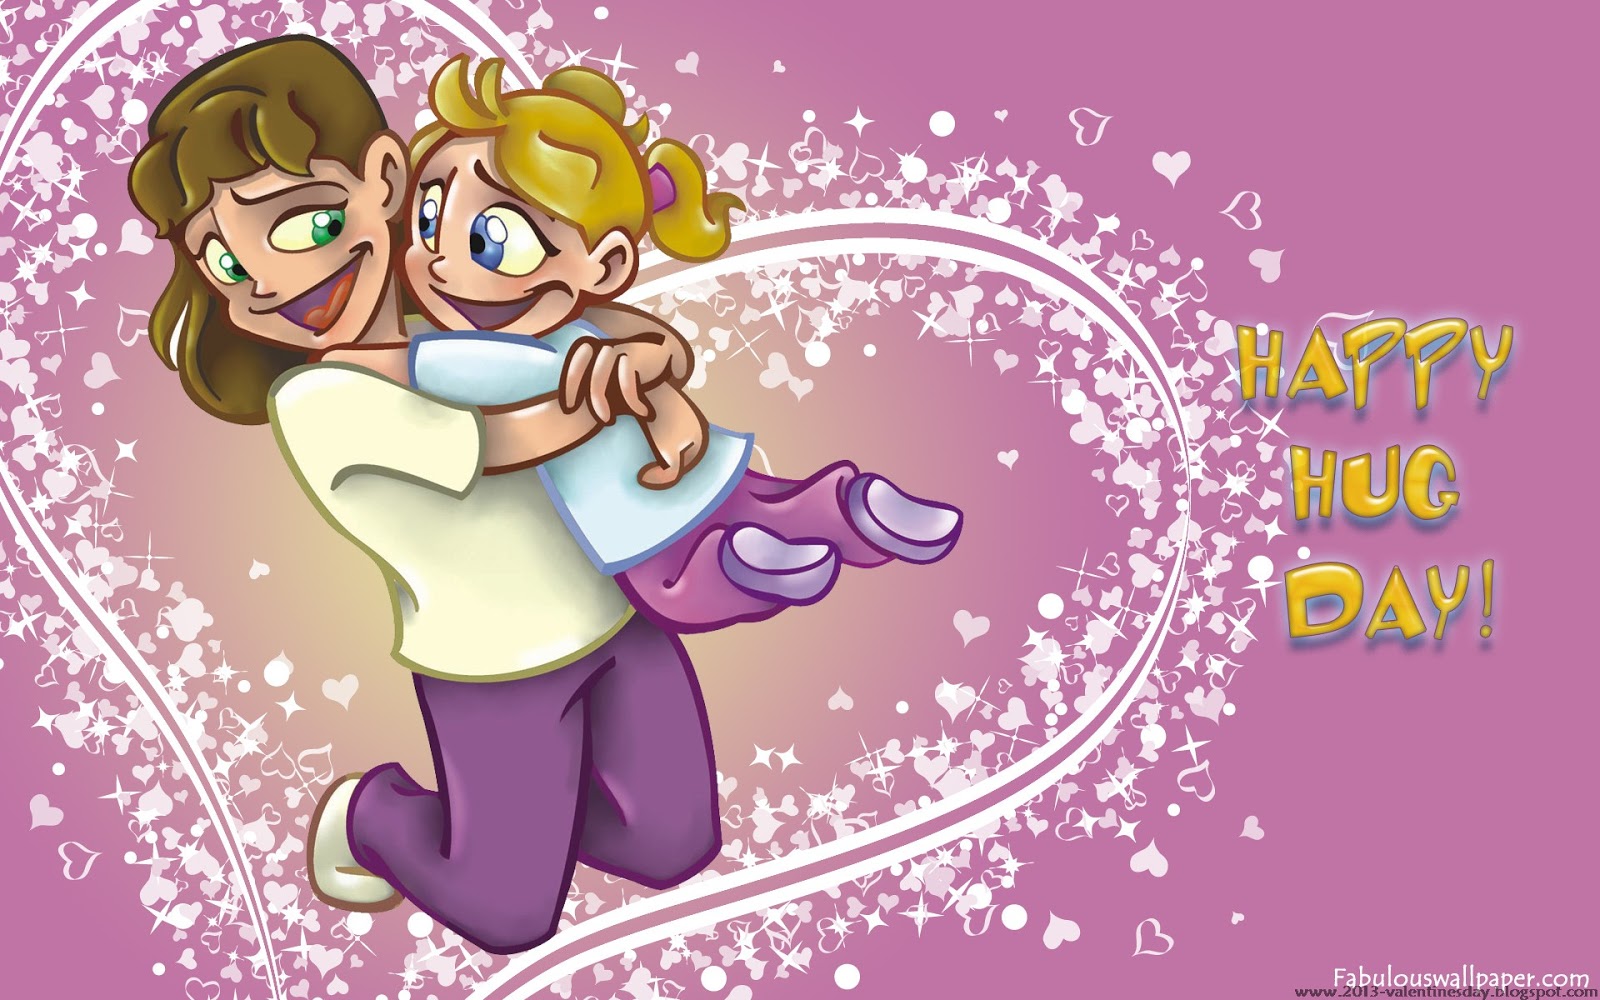 Happy Hug Day 2014 Lovely HD Wallpapers and Pics romantic hug